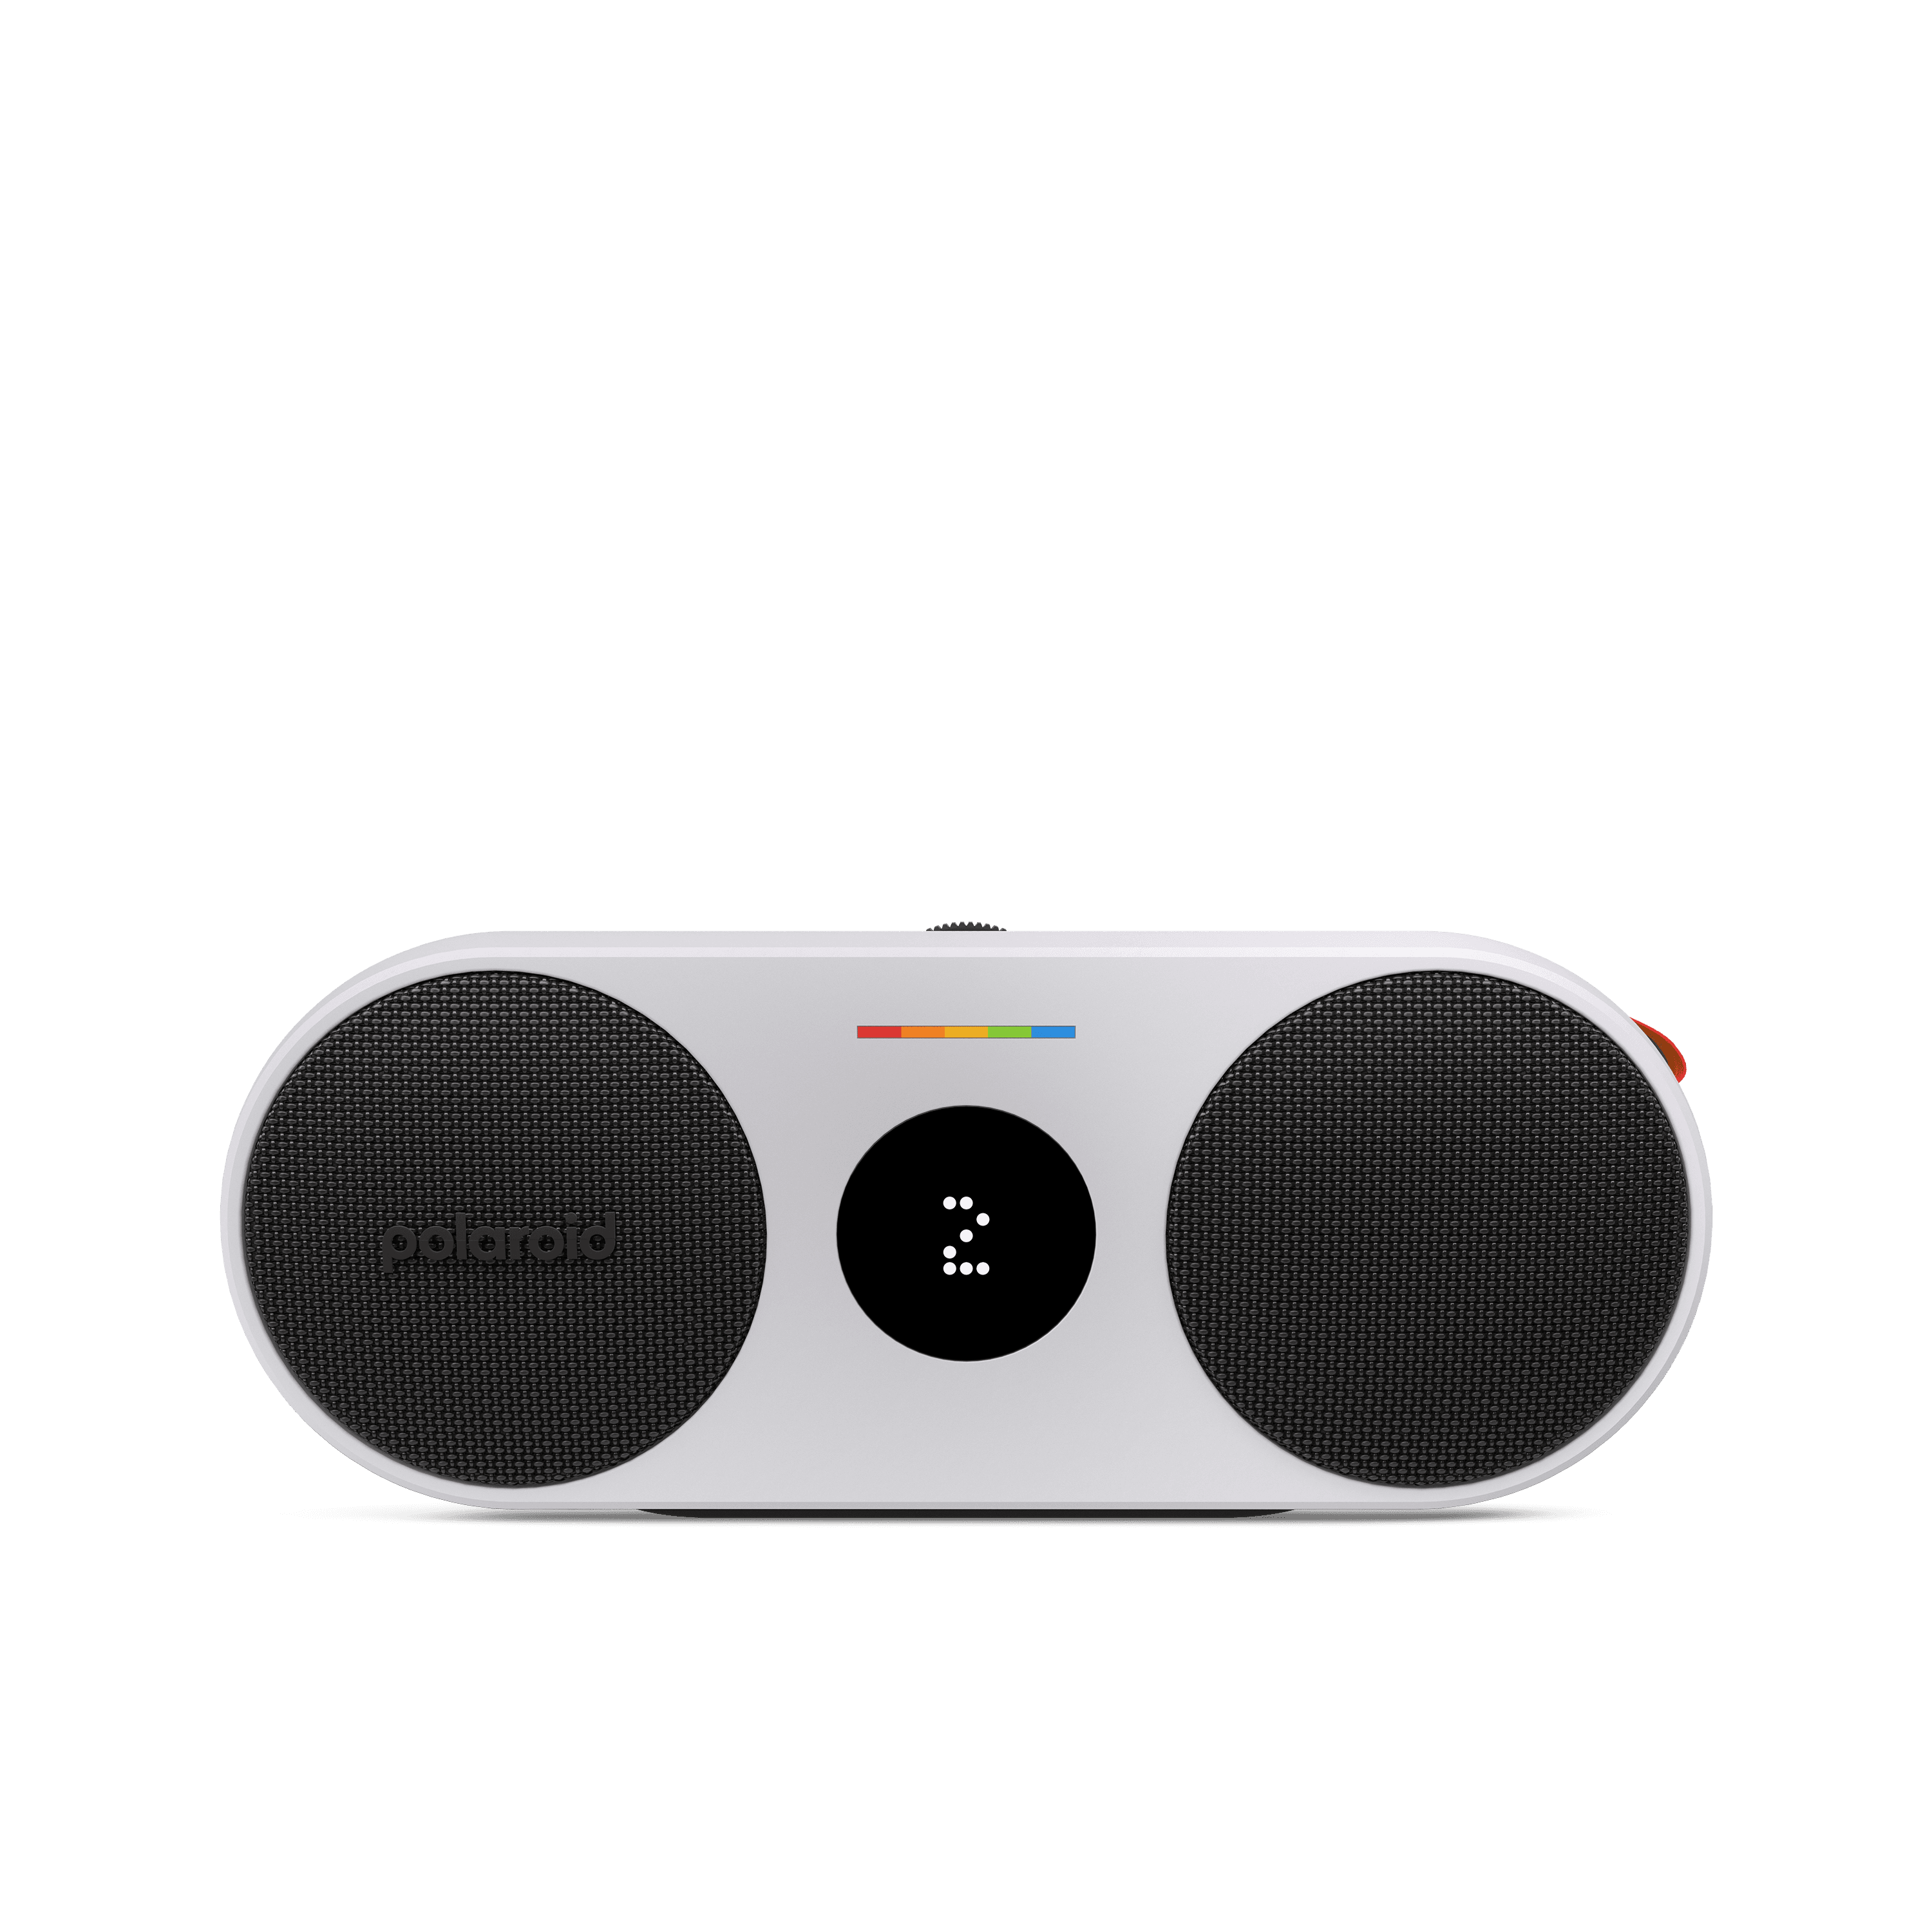 سبيكر بلوتوث محمول اسود وابيض بولارويد POLAROID P2 Music Player Bluetooth Wireless Portable Speaker